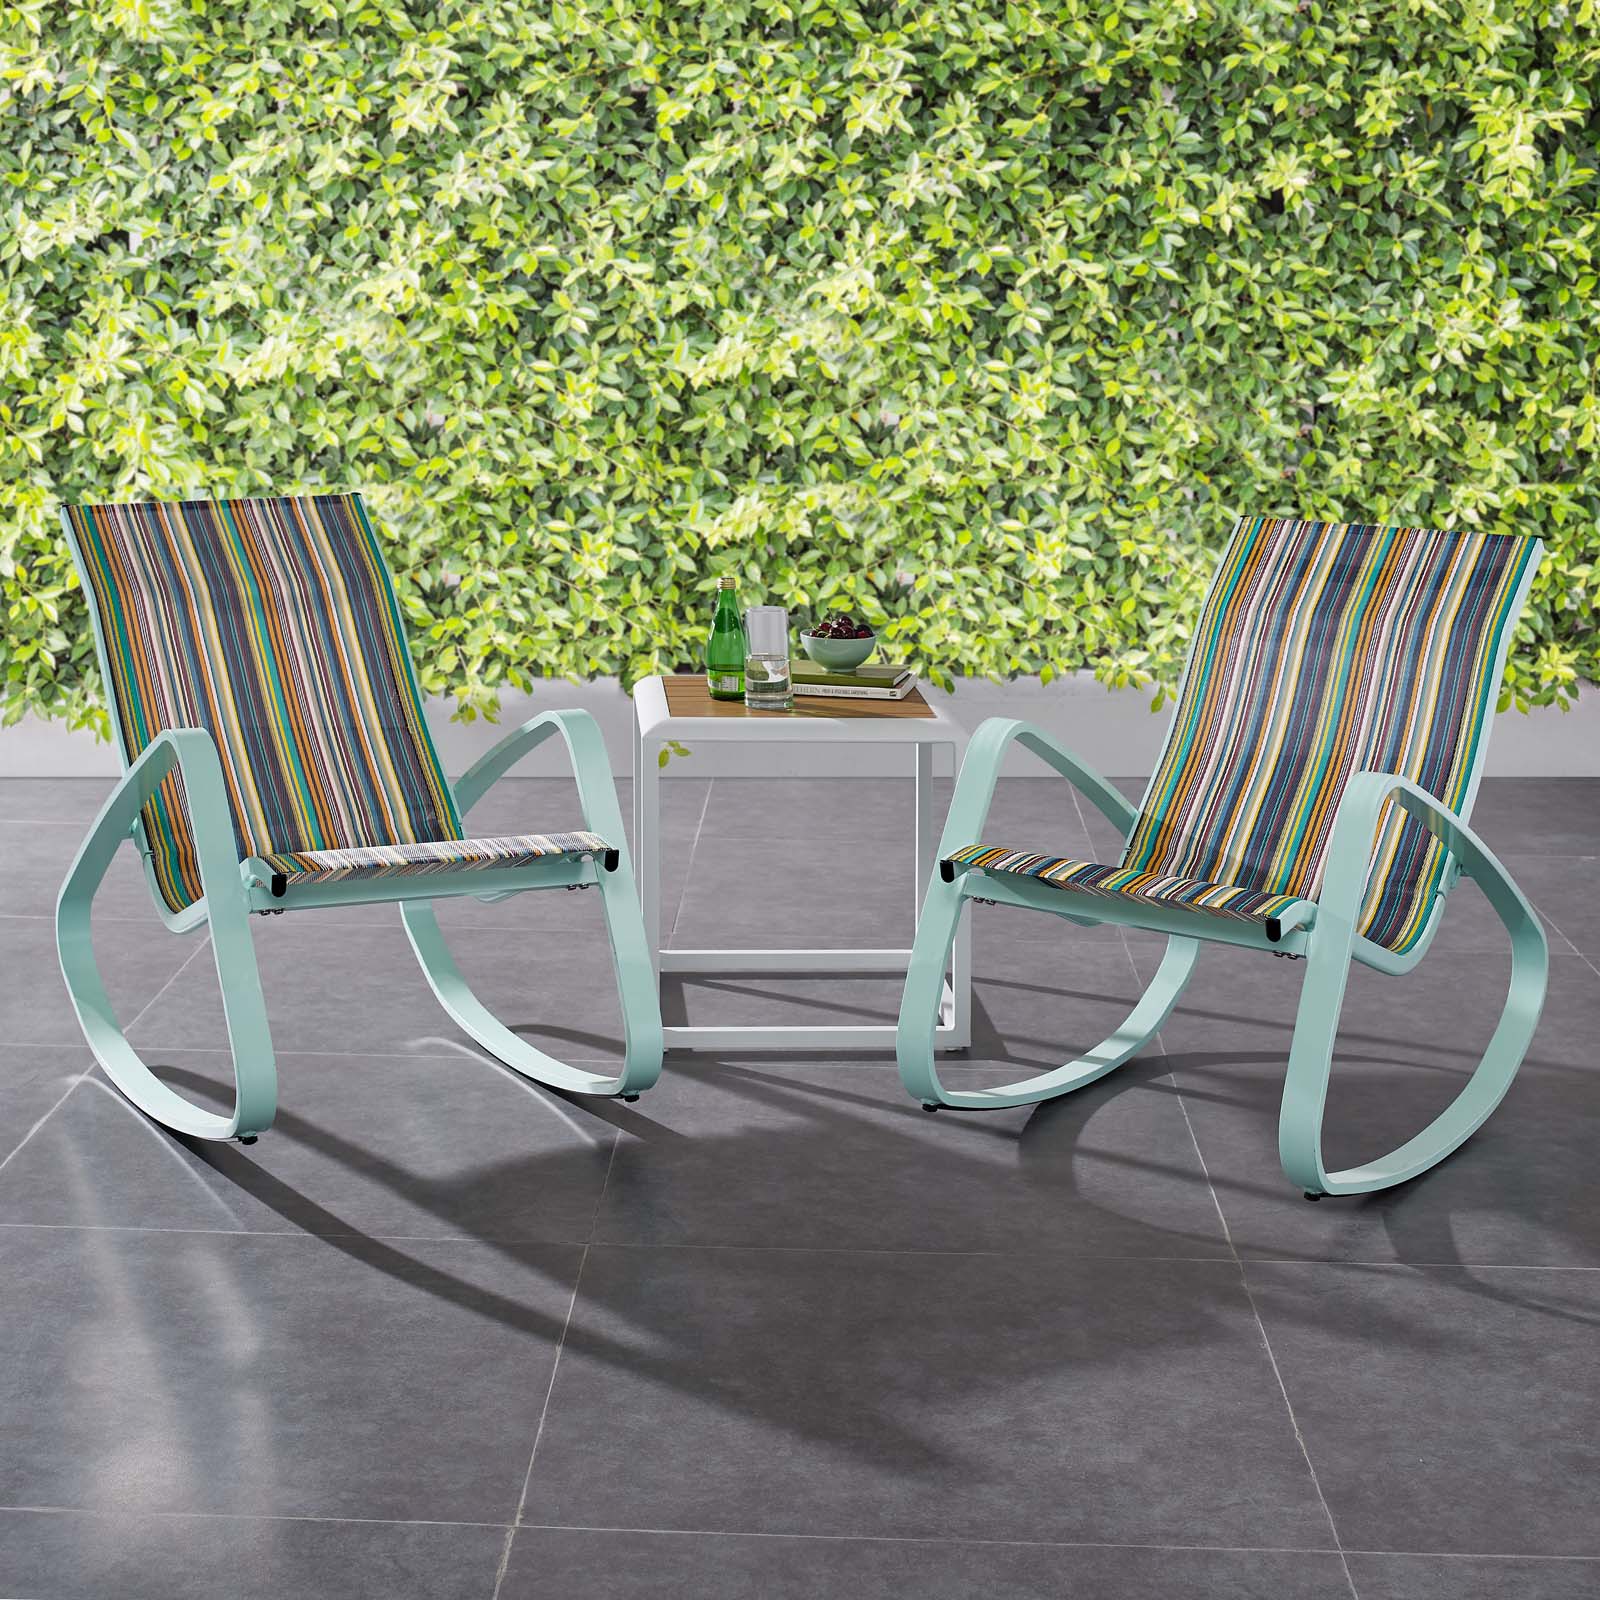 Modway Traveler Rocking Lounge Chair Outdoor Patio Mesh Sling Set of 2 in Green Stripe - image 1 of 6